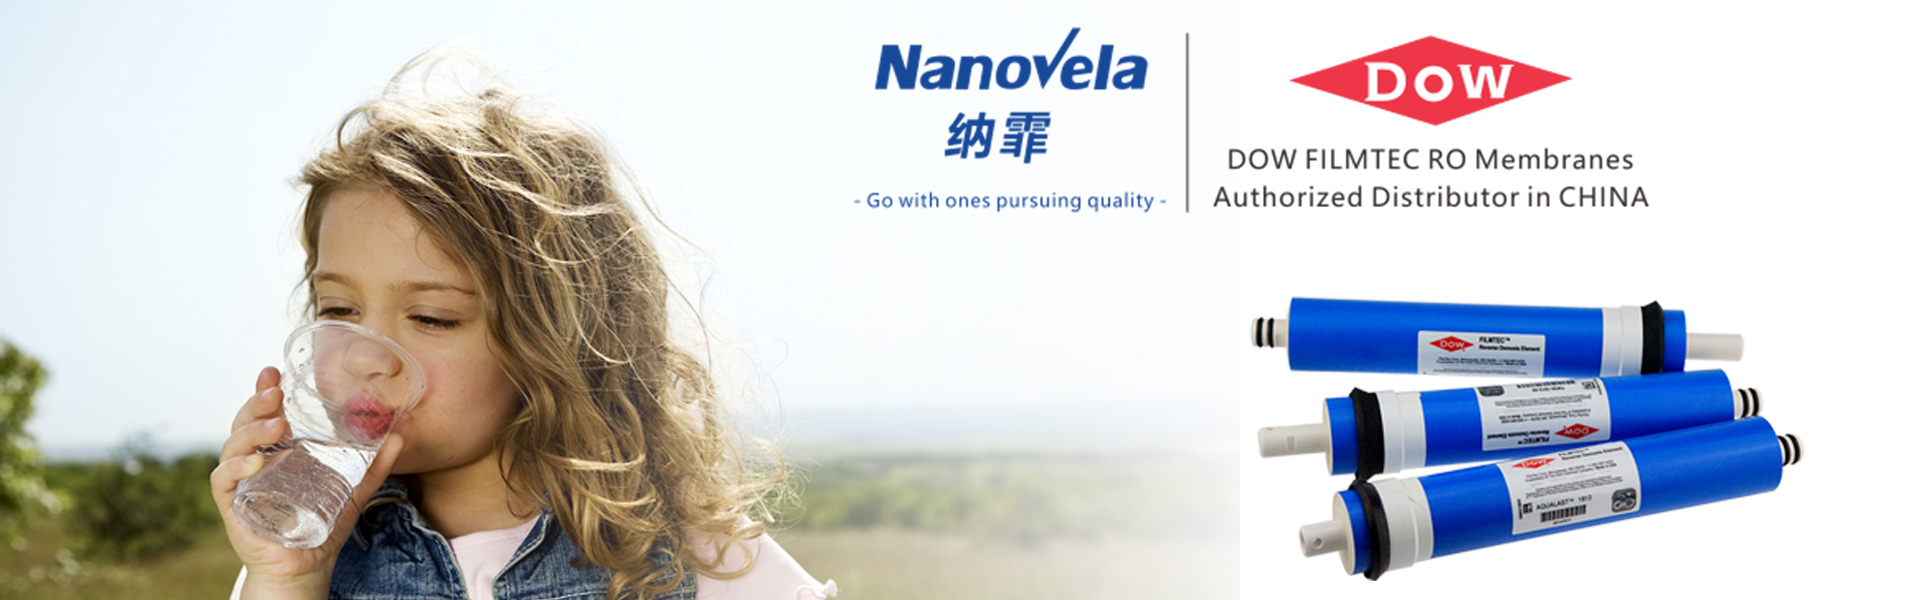 Nanovela banner 2